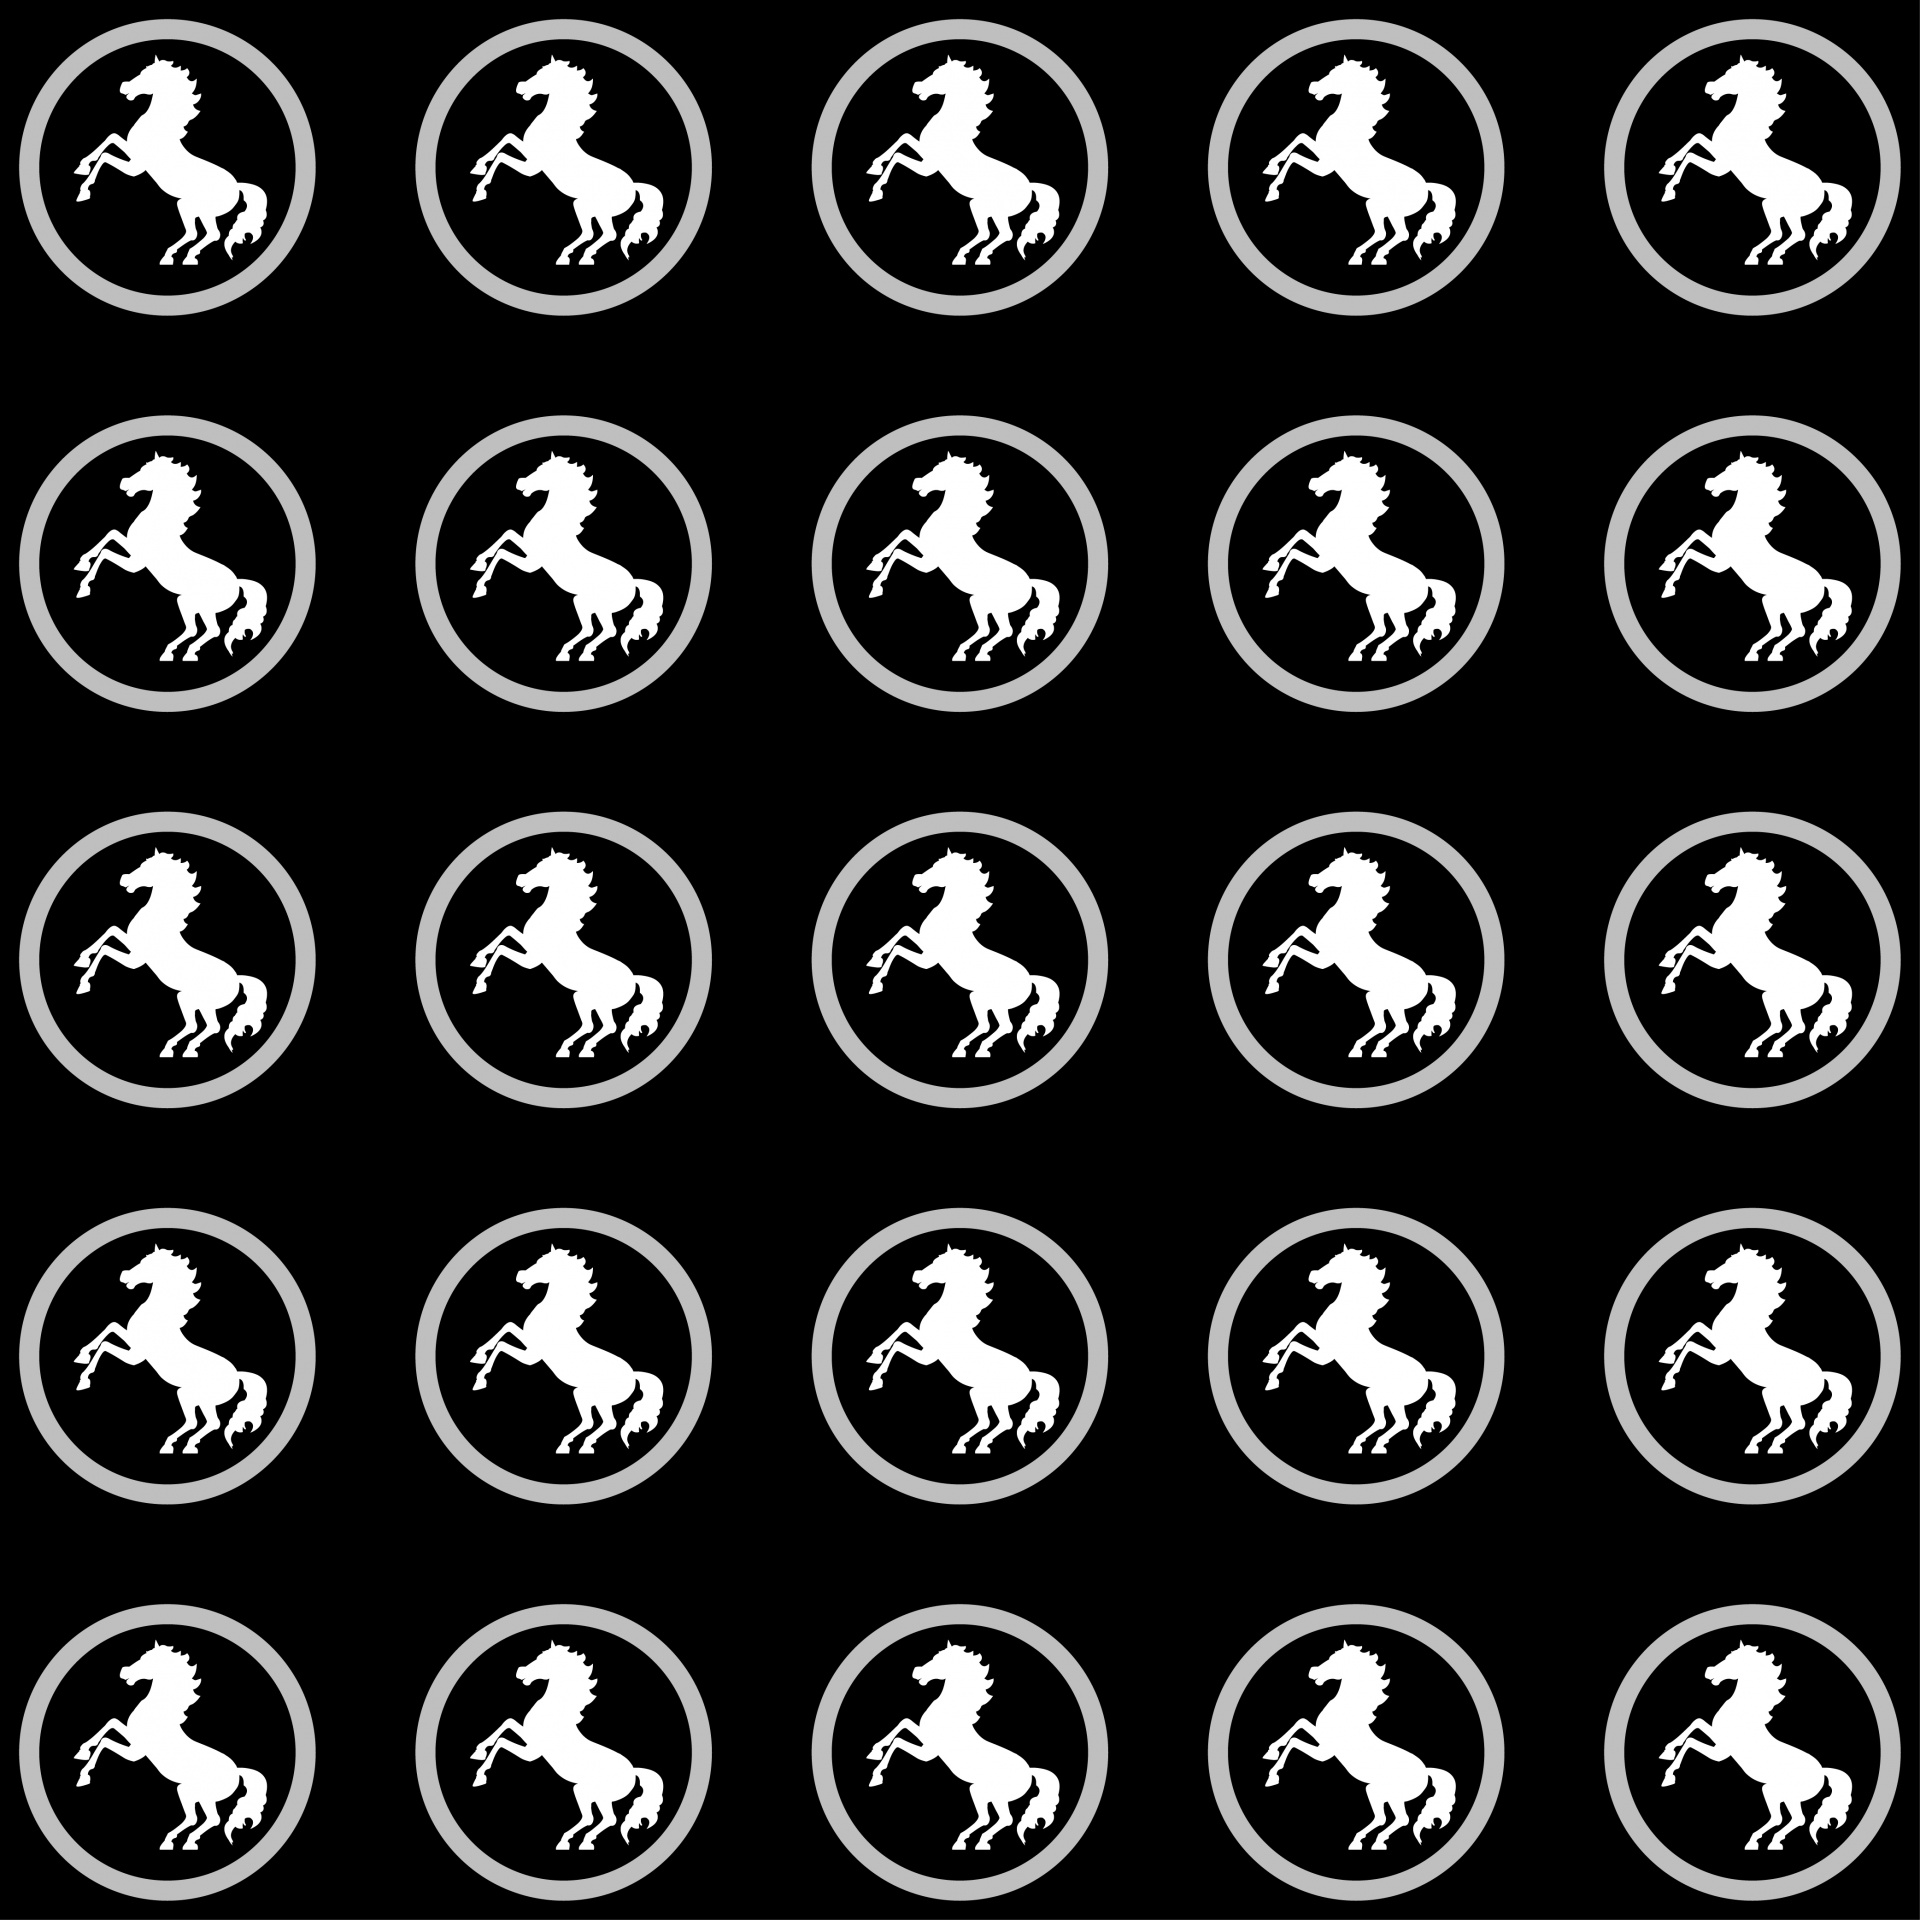 horse horses wallpaper free photo